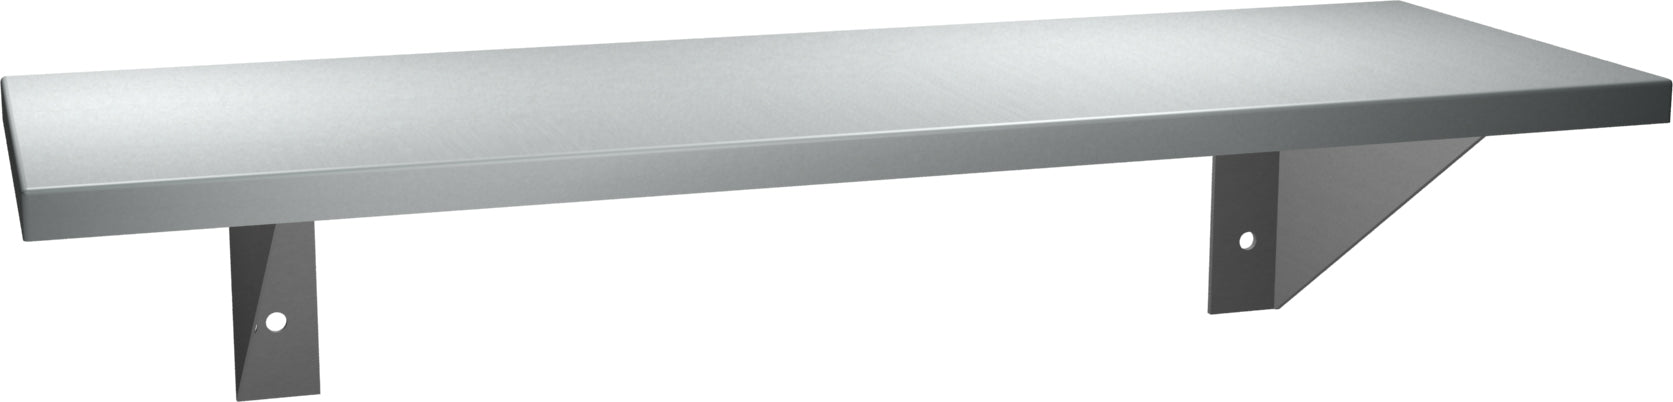 ASI 0692-816 Shelf, Stainless Steel, 8 X 16 Inch